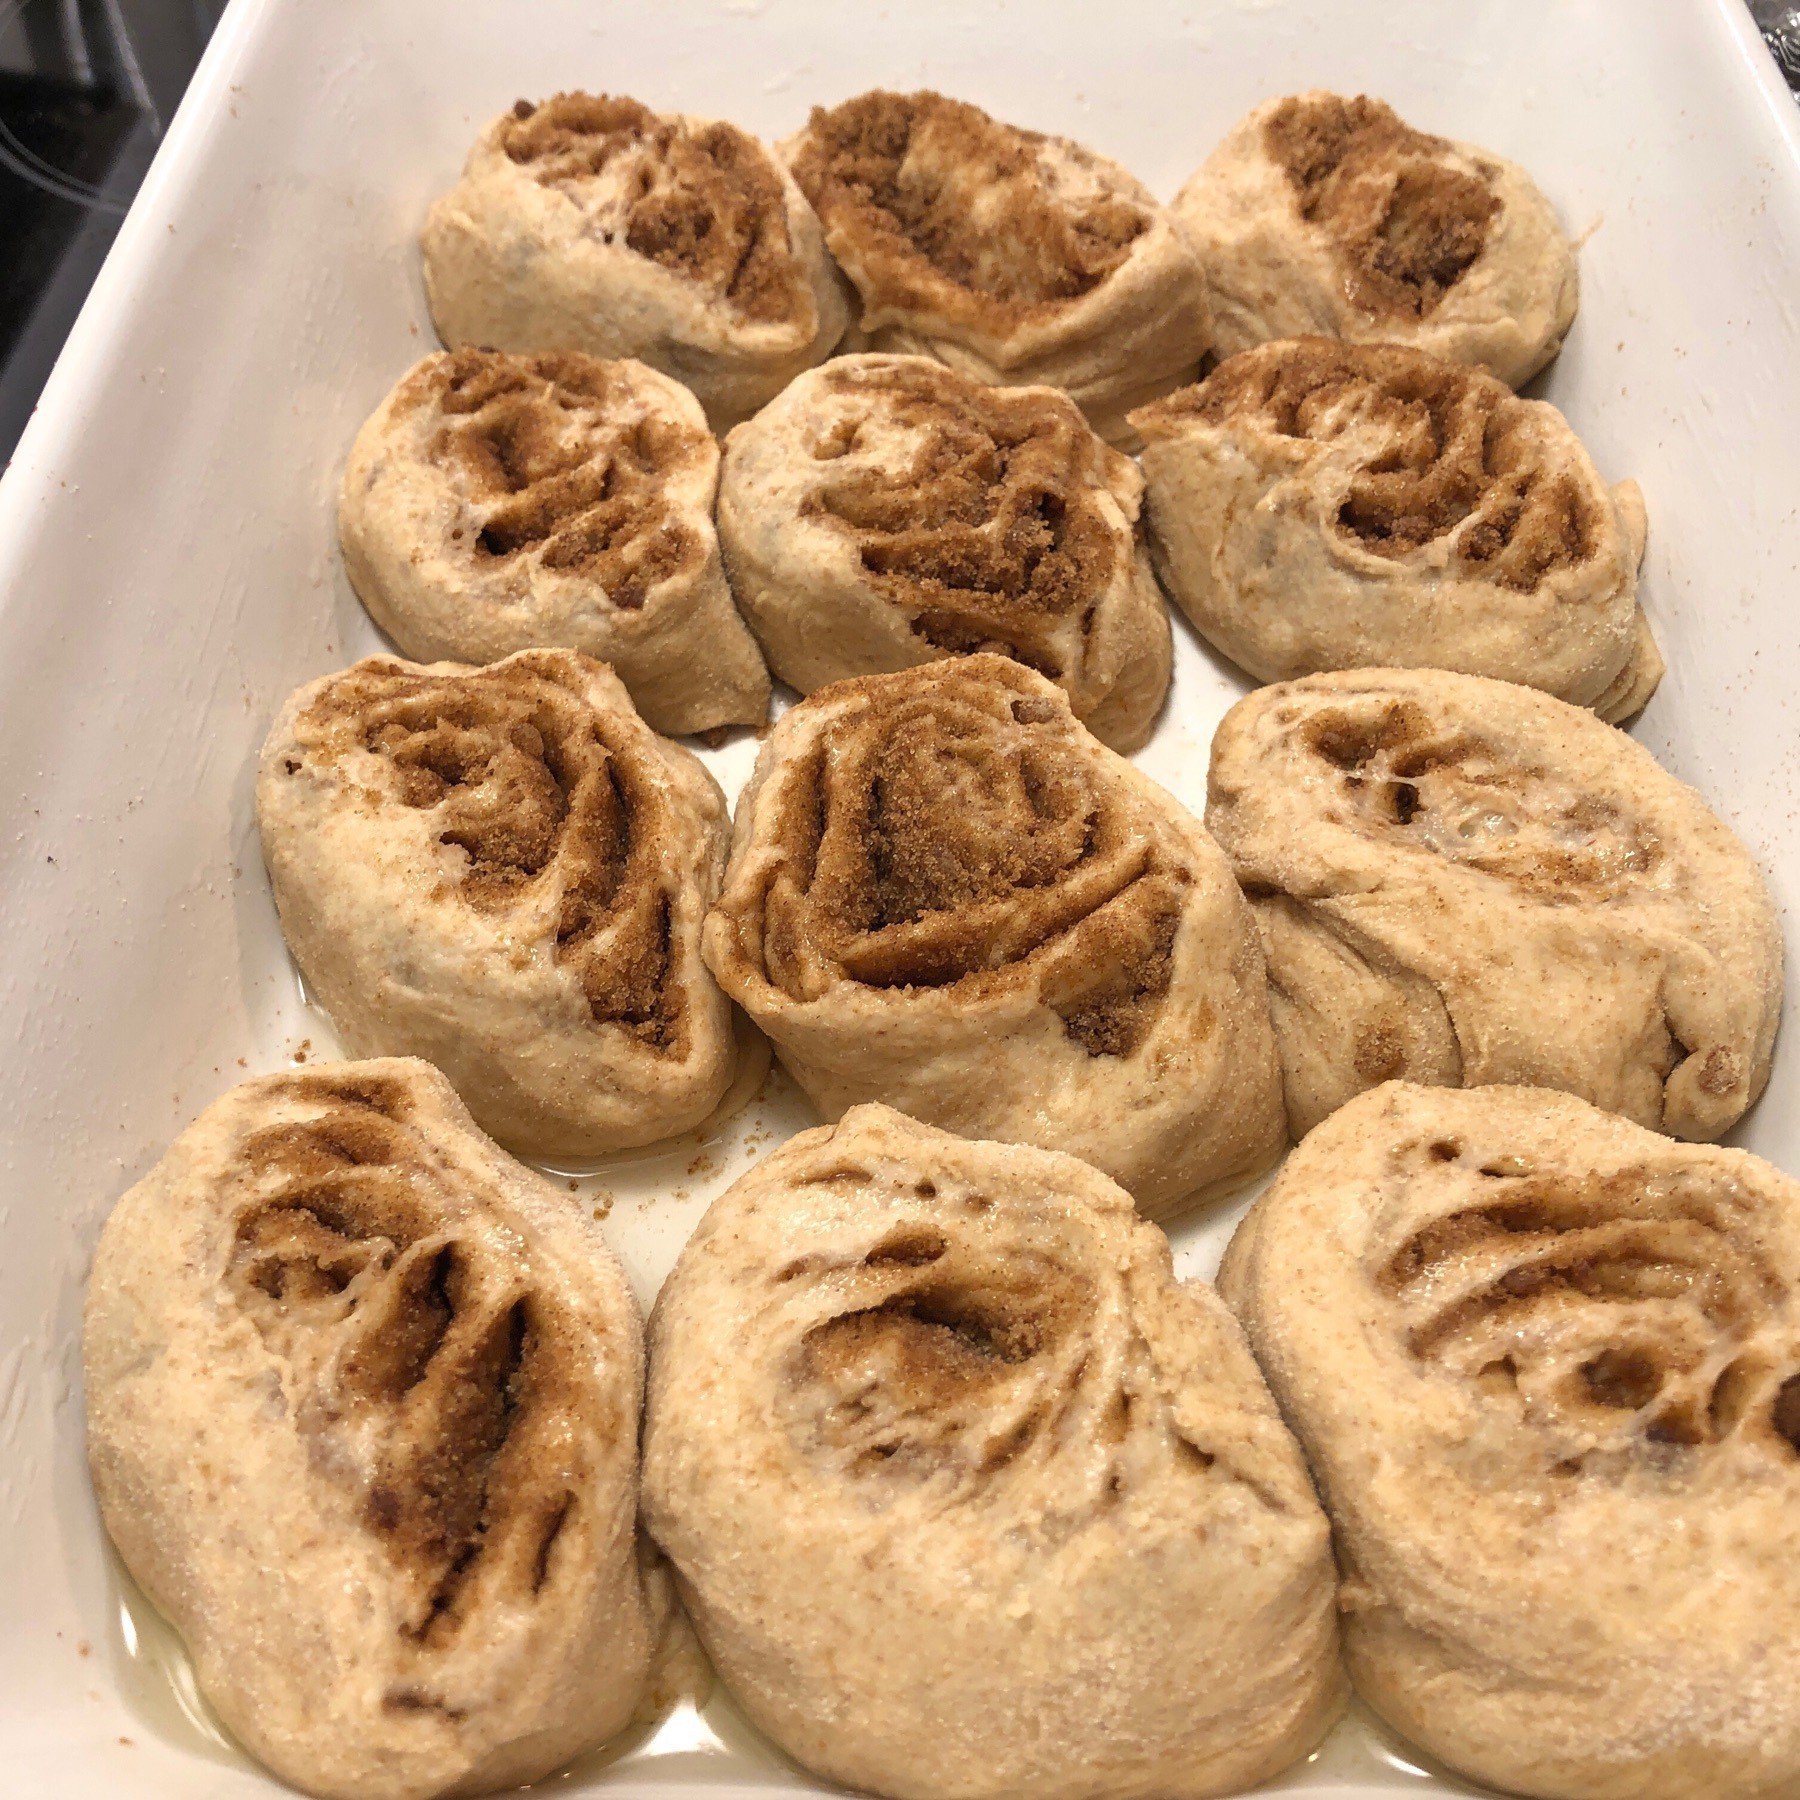 Cinnamon buns rising in a pan.